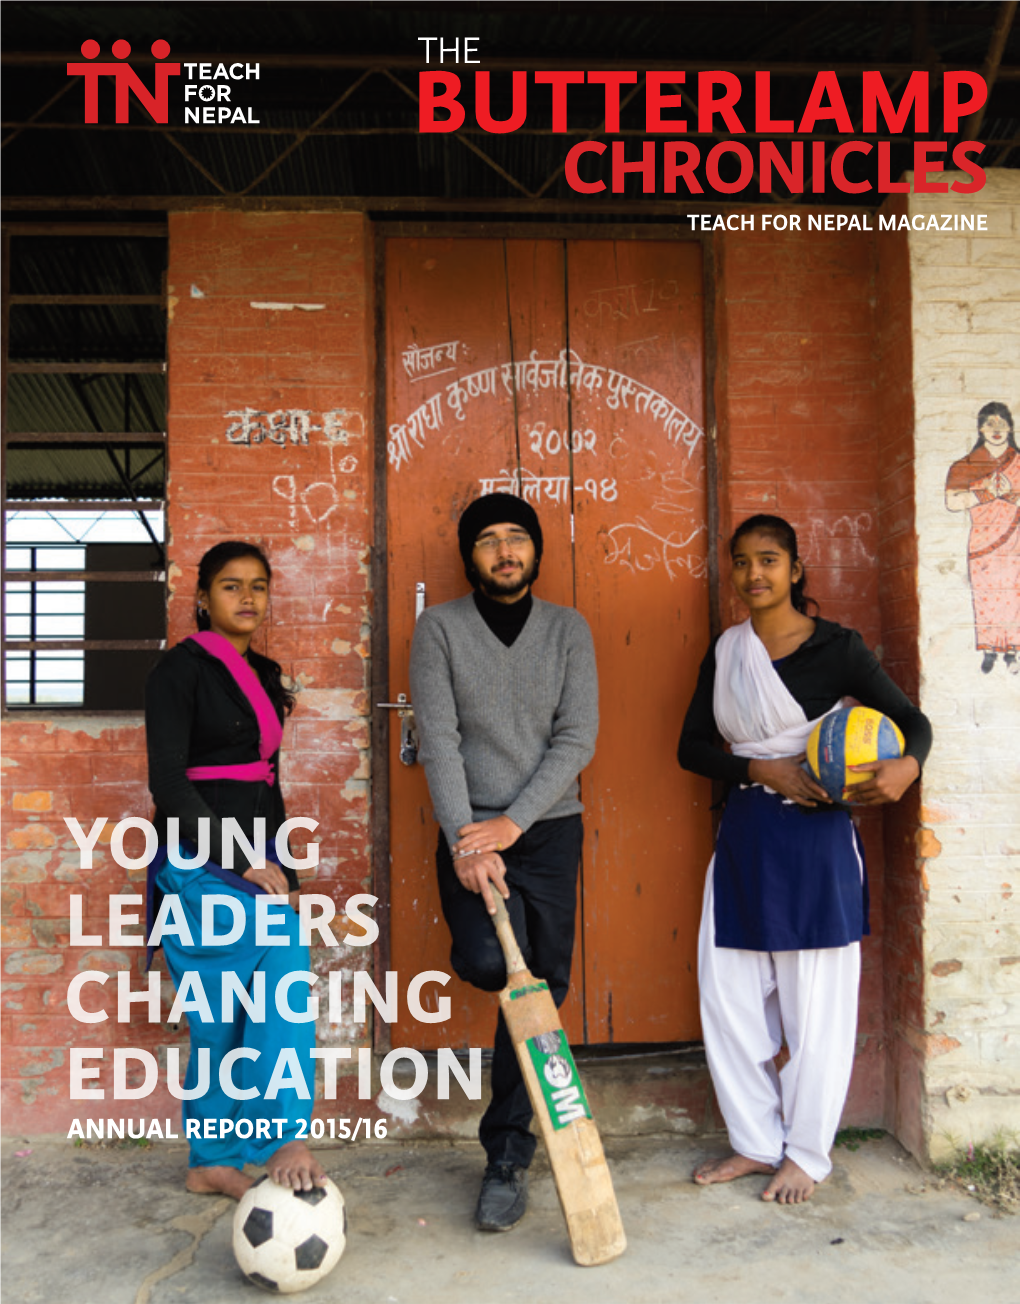 Butterlamp Chronicles Teach for Nepal Magazine